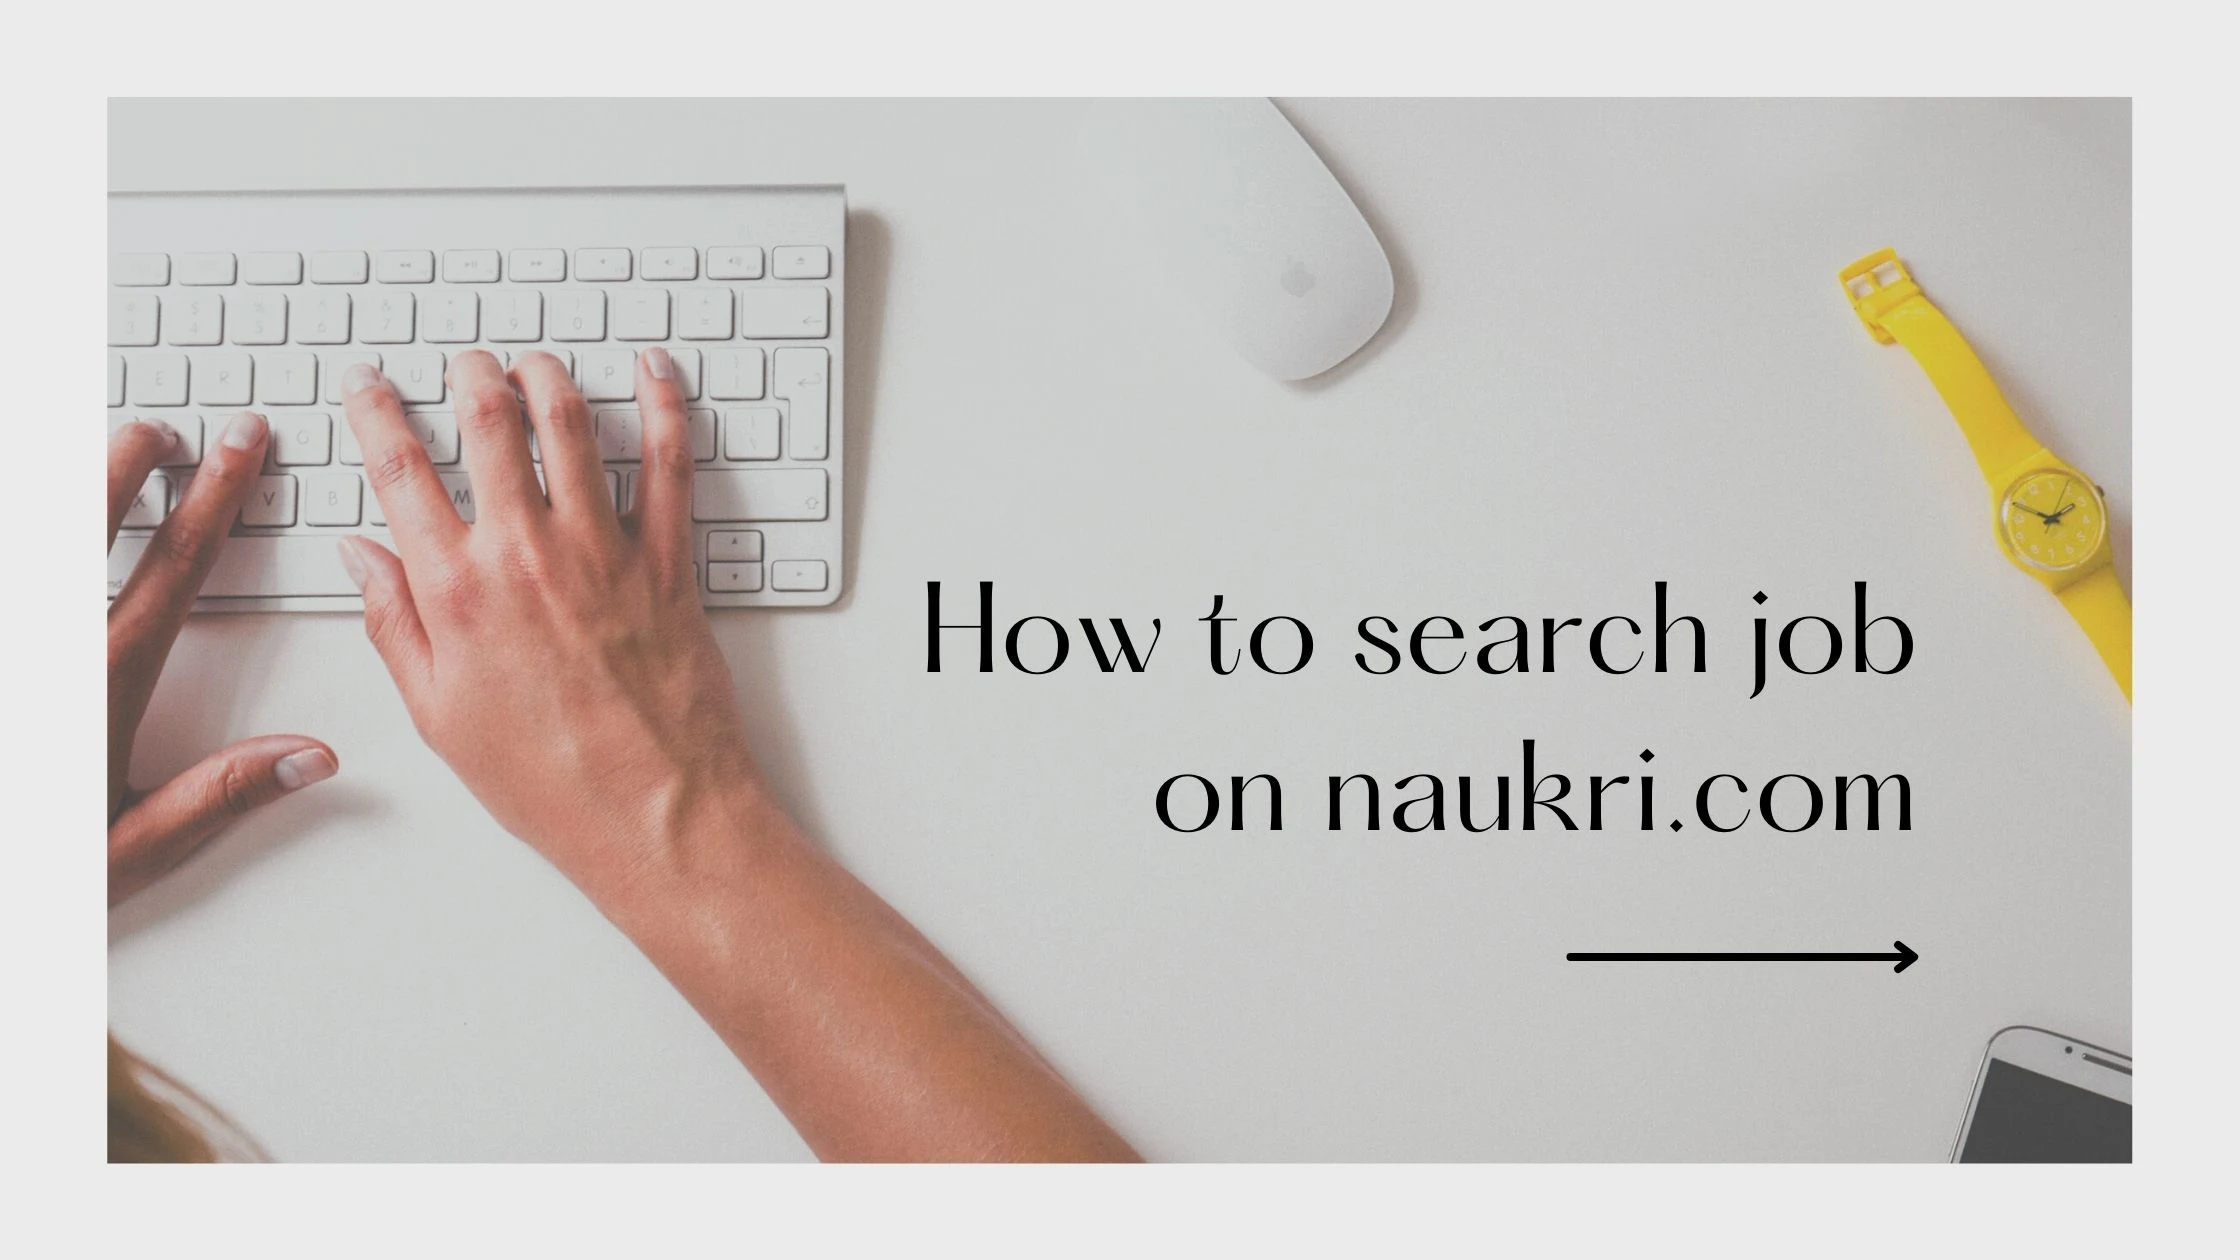 How to search job on Naukri.com?